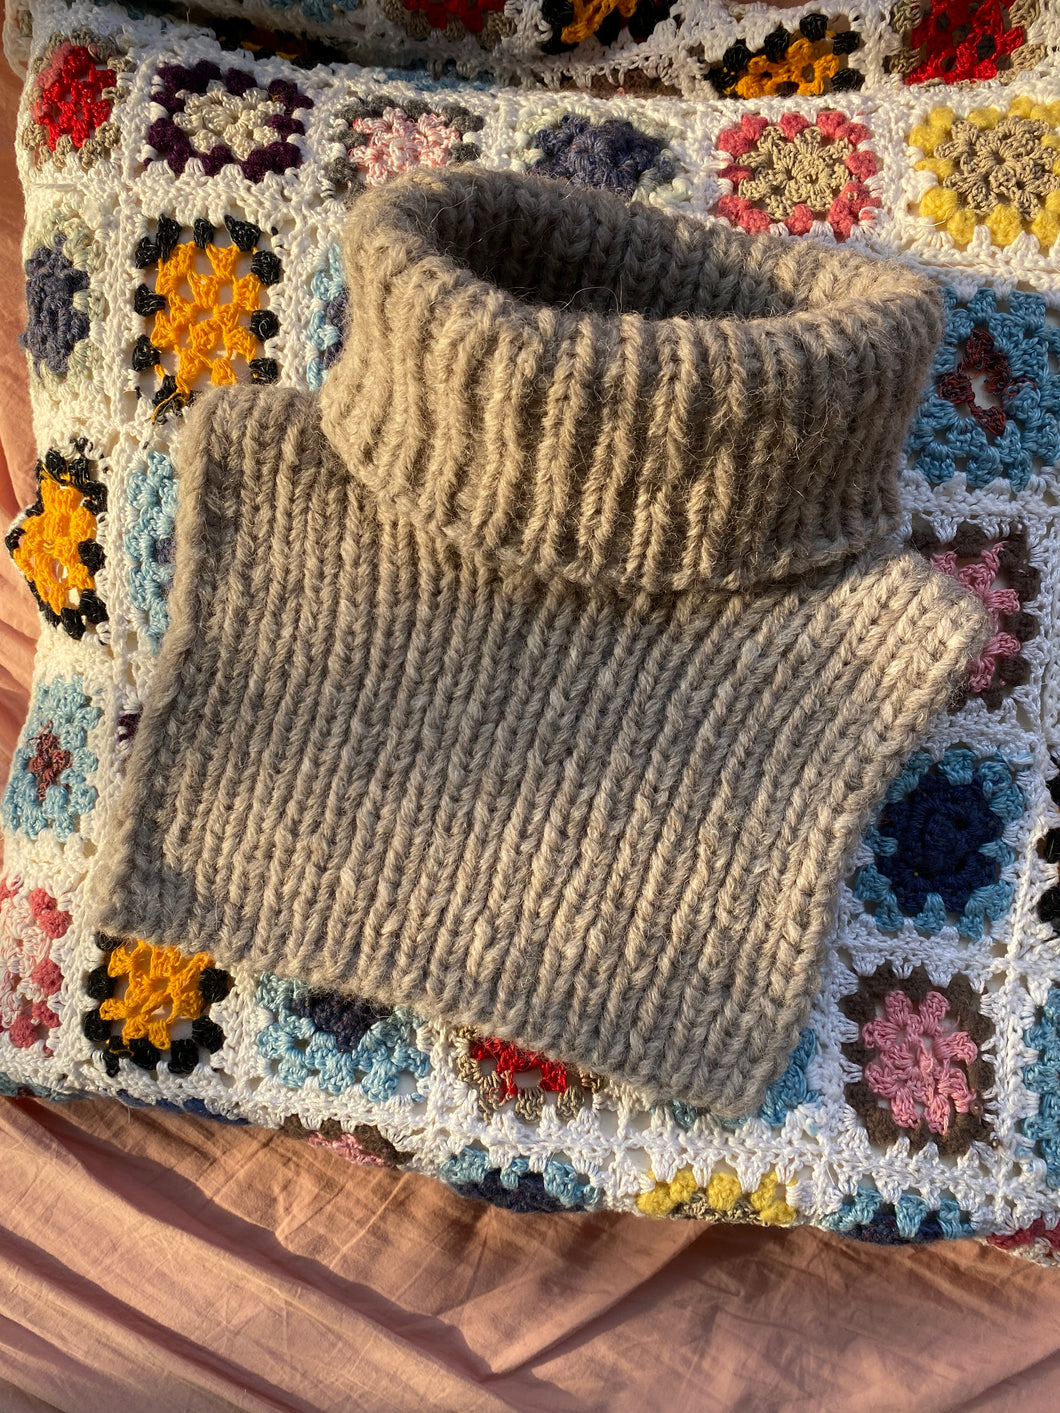 Deima's turtleneck collar - knitting pattern (english)